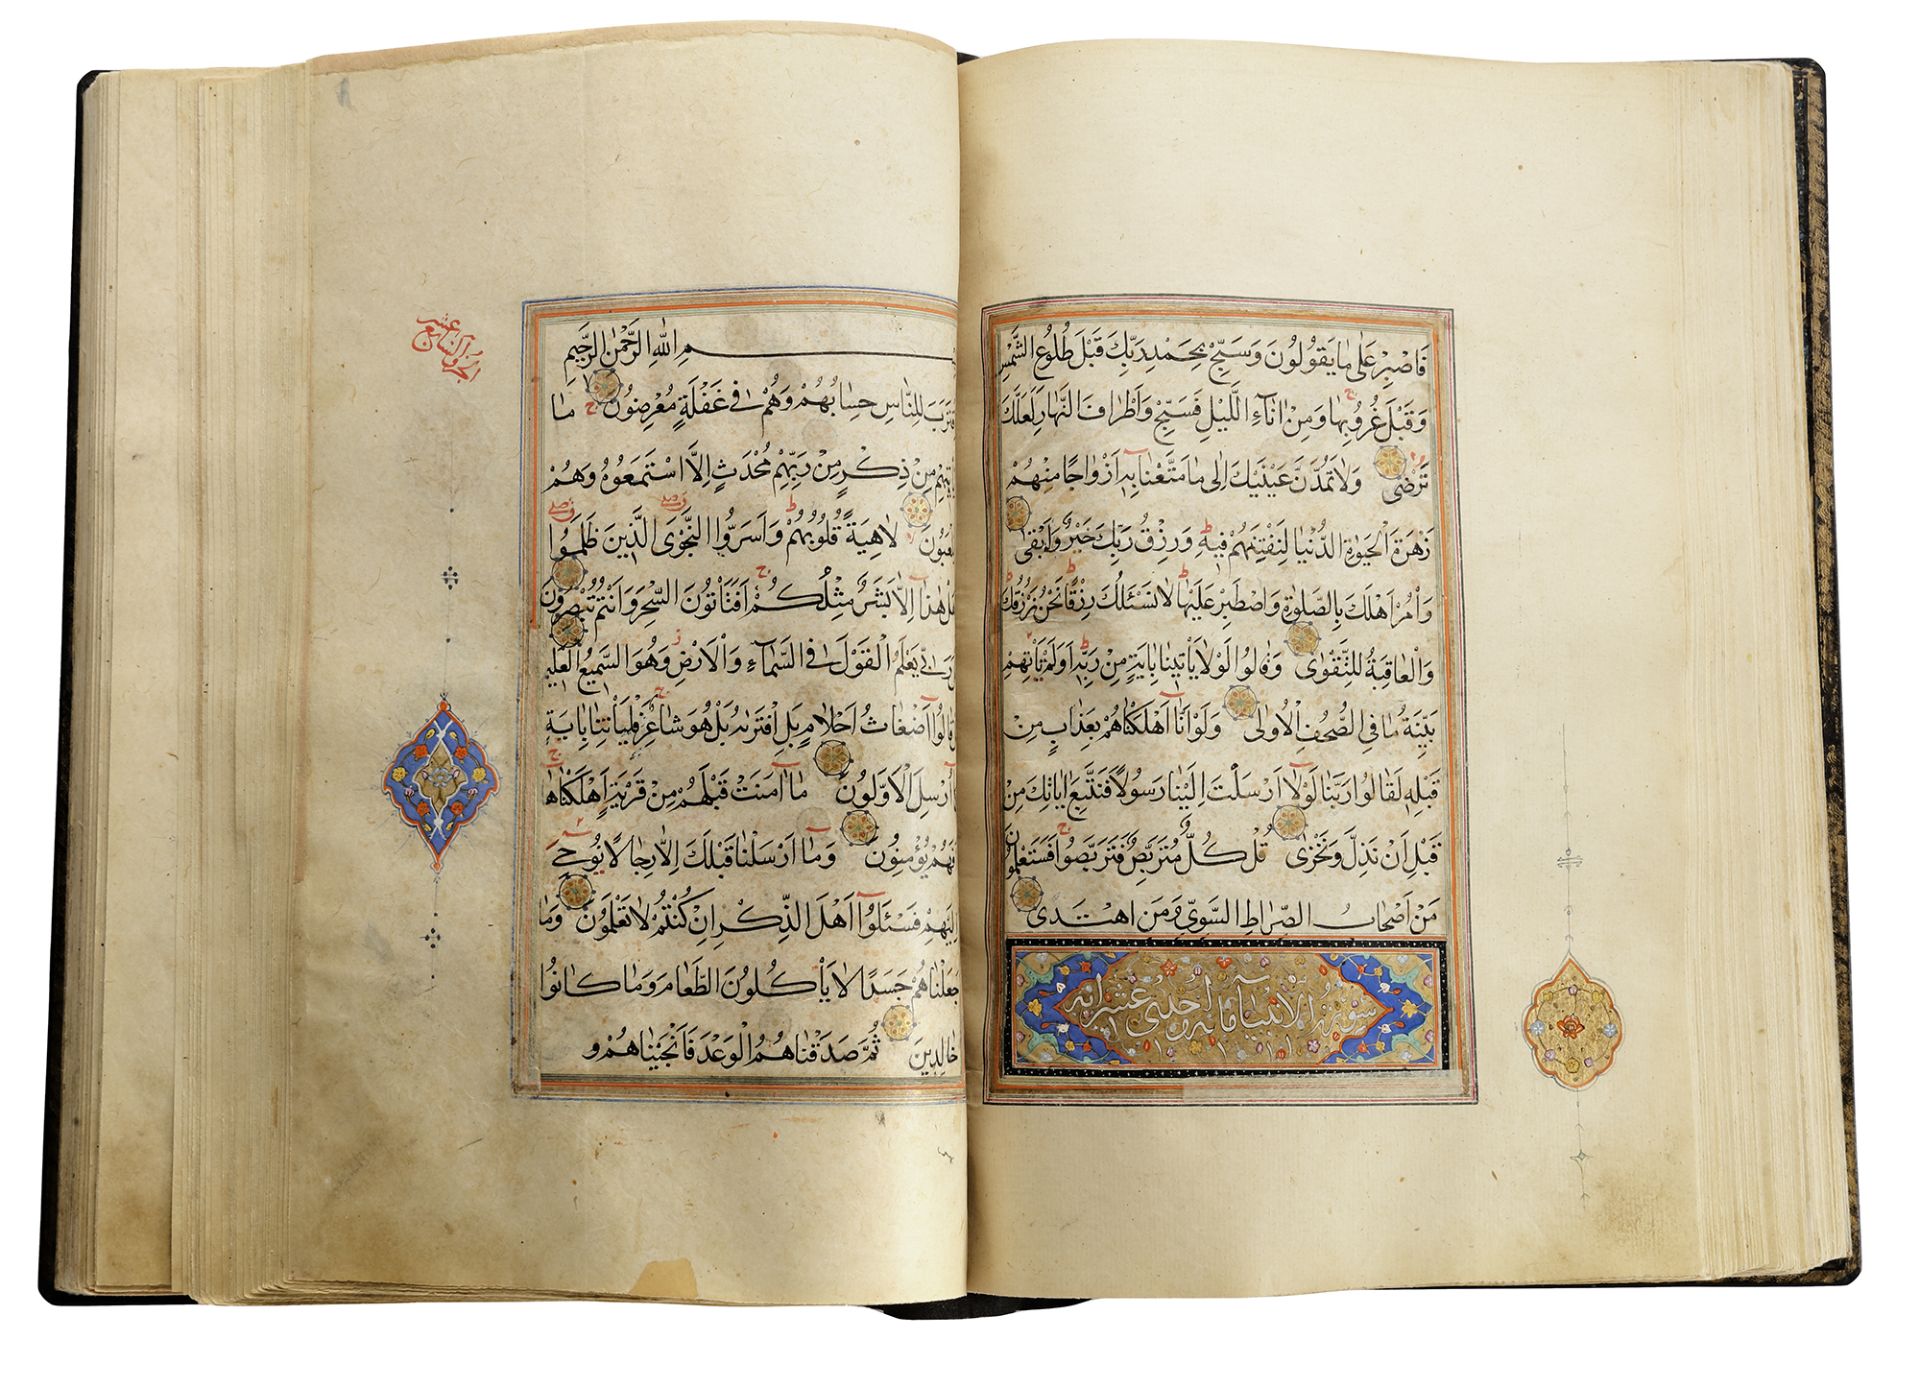 A LARGE ILLUMINATED QURAN, COPIED BY ABDULLAH AL-HUSAYNI, PERSIA, SAFAVID, SHIRAZ, 16TH CENTURY - Image 14 of 21